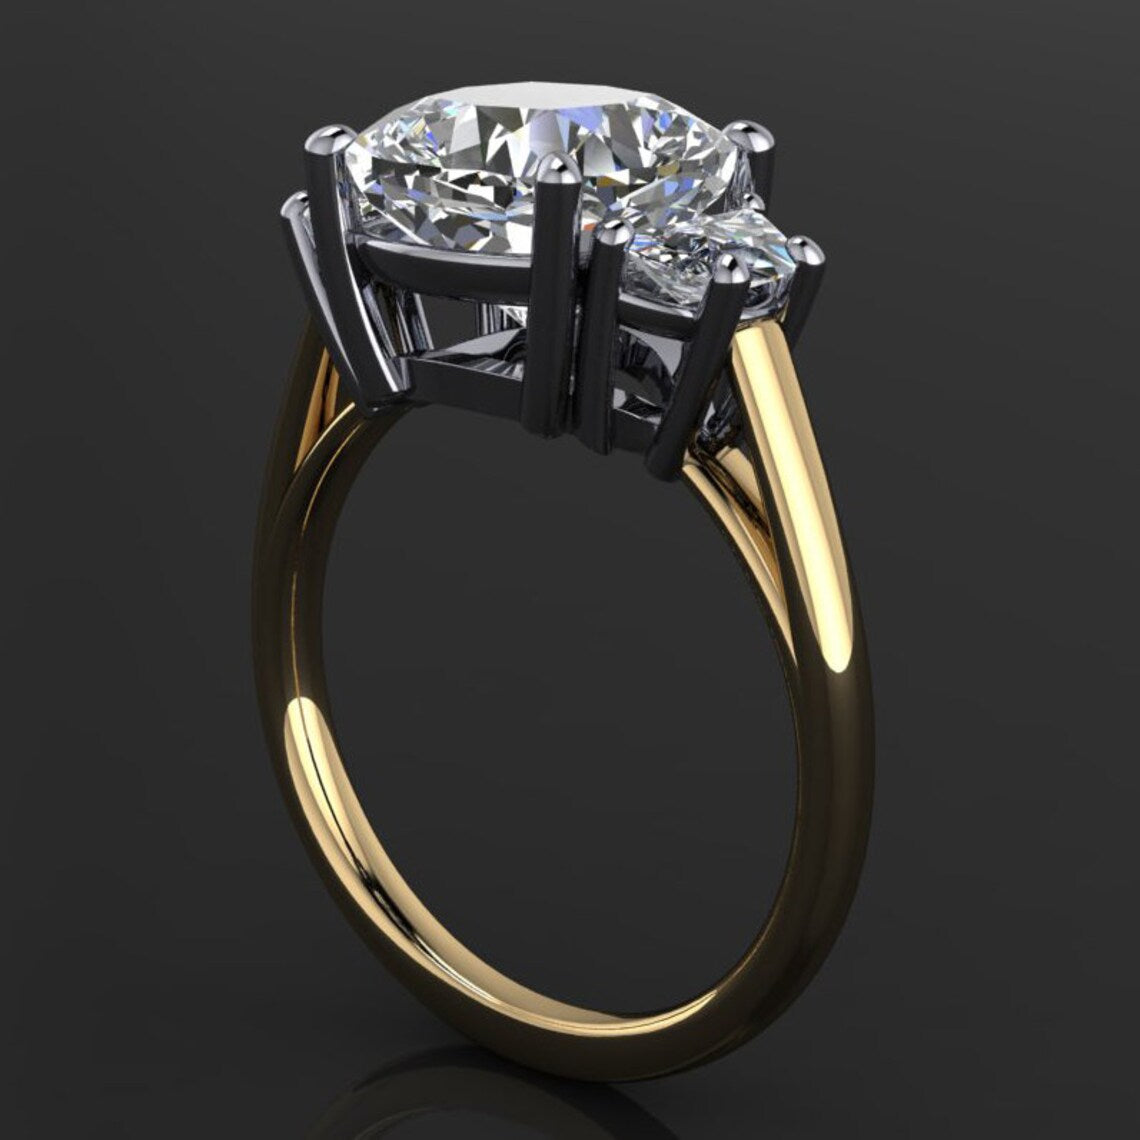 ava ring - 3 carat cushion NEO moissanite engagement ring, half moon side stones - J Hollywood Designs